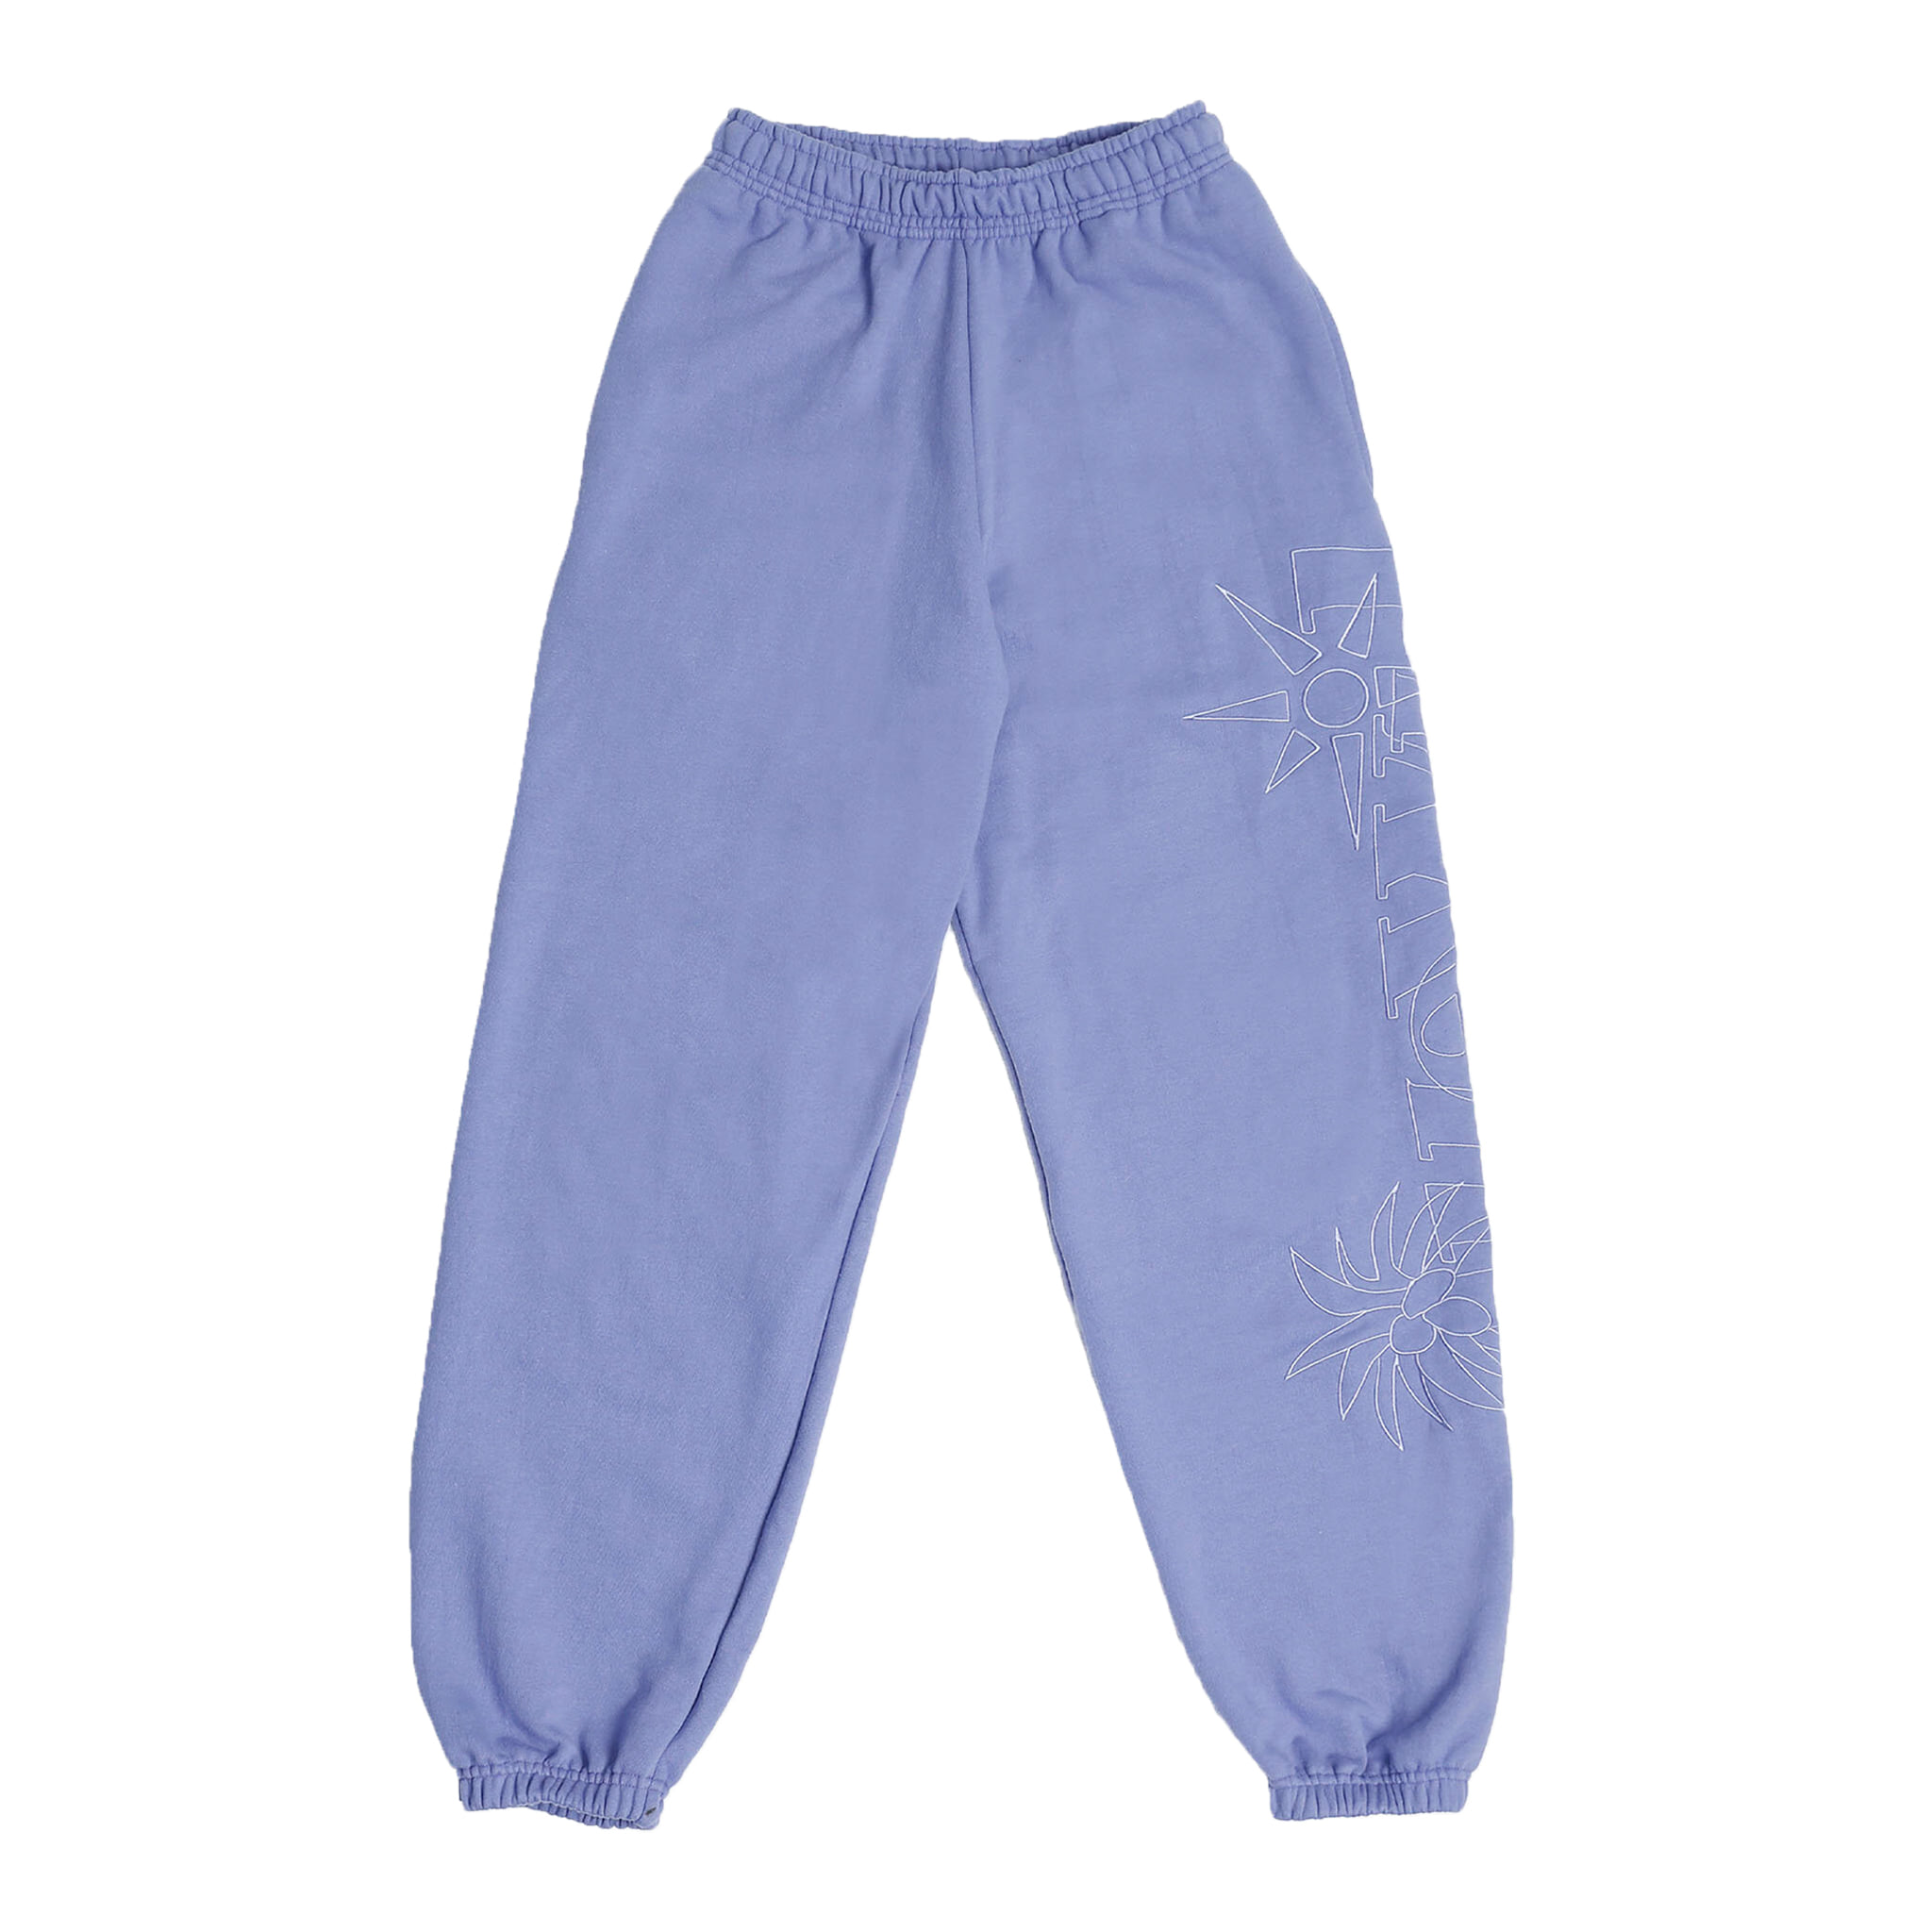 Tuewid classic sweatpants in drop fit Murkey violet colour